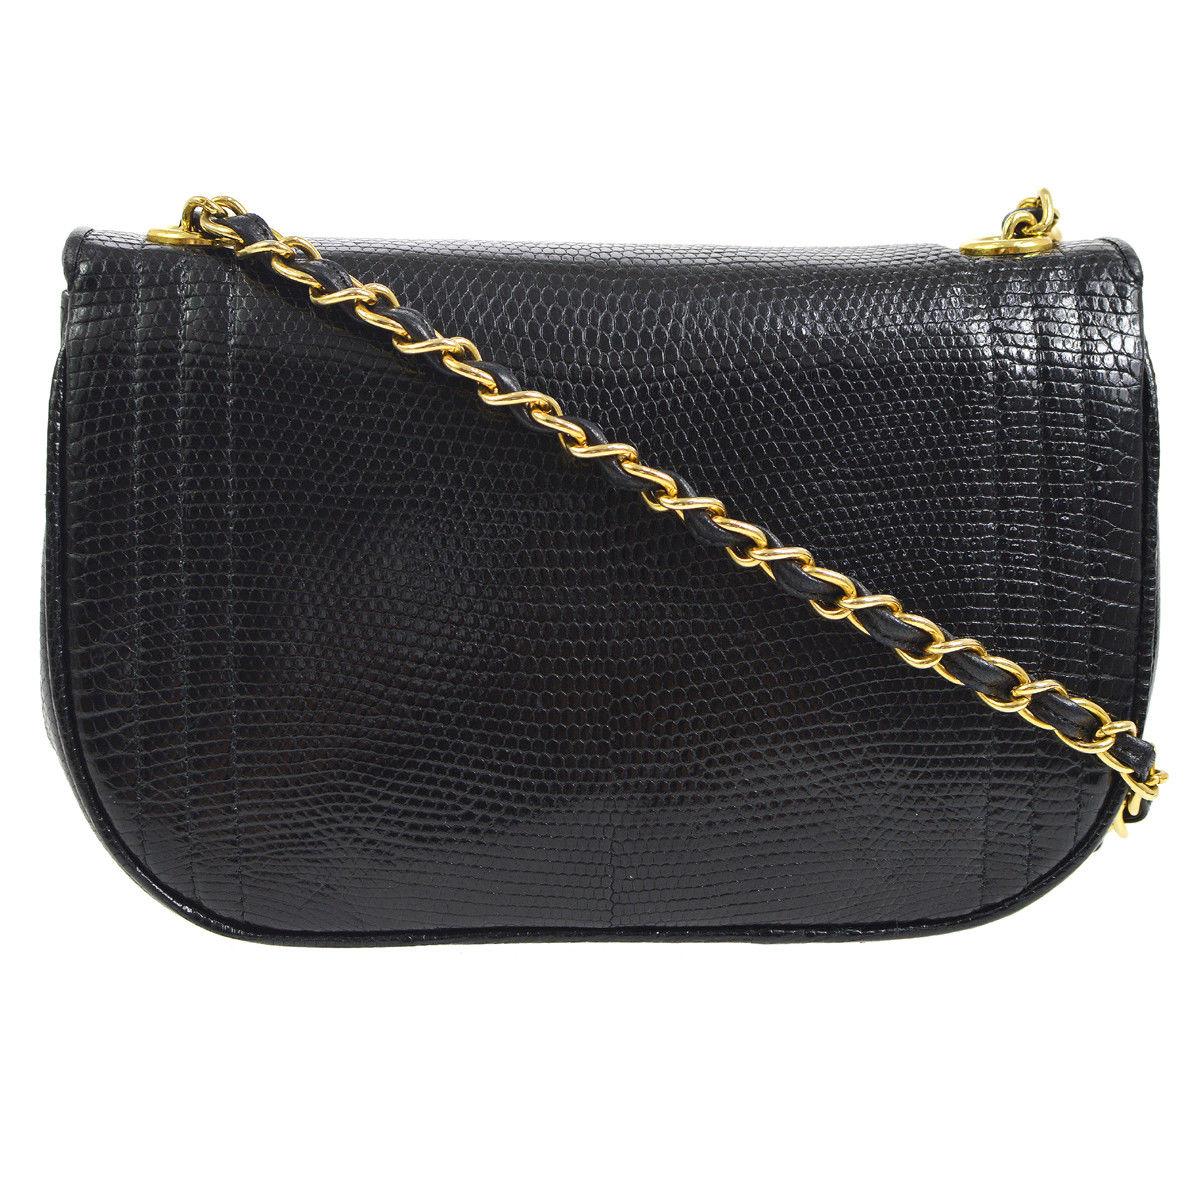 Chanel Black Lizard Half Moon Leather Evening Clutch Shoulder Flap Bag in Box (Schwarz)